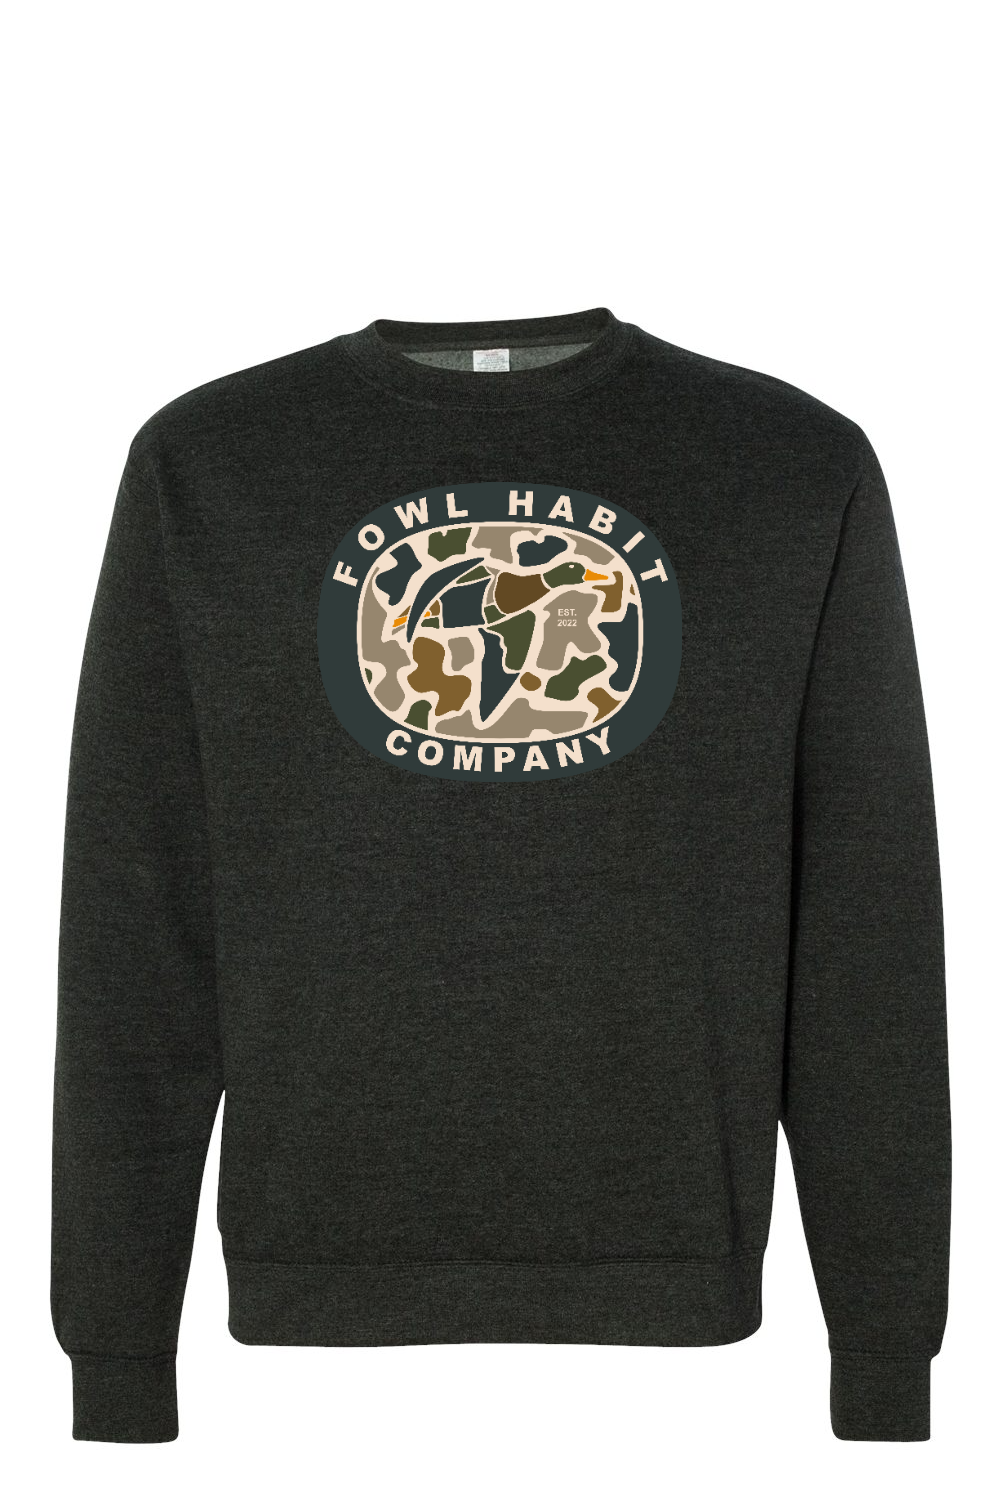 The Vintage Sweatshirt - Fowl Habit Co.